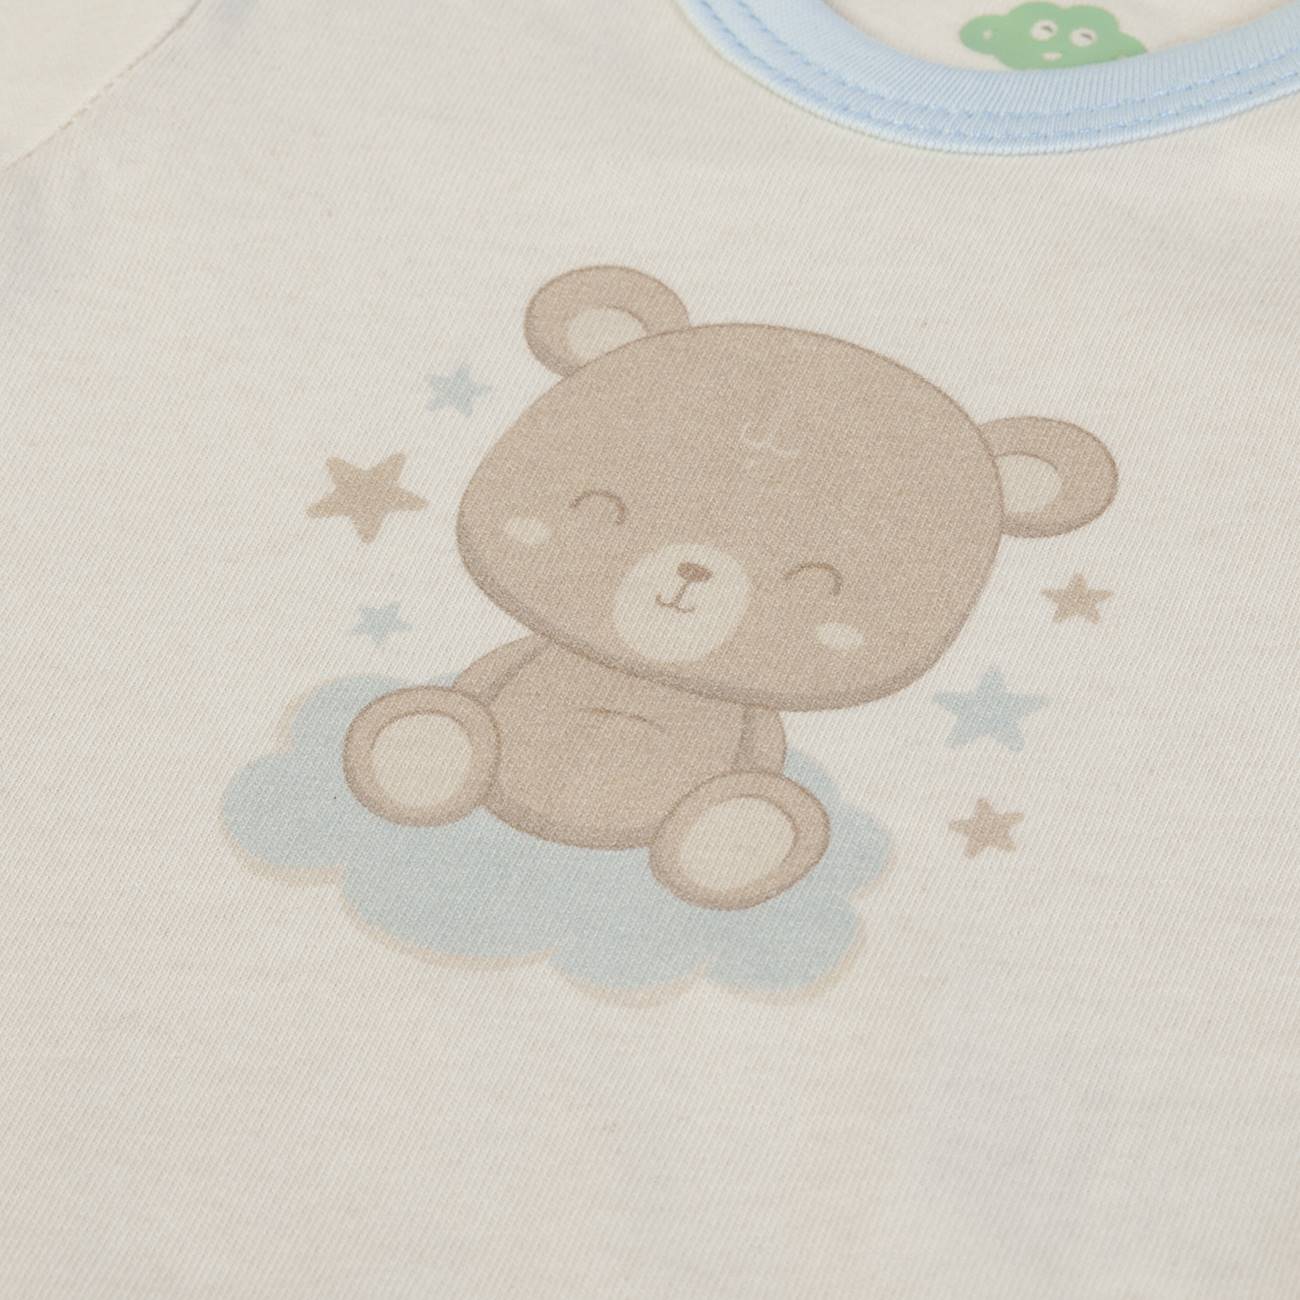 Organic Teddy Bear Babygrow gift set